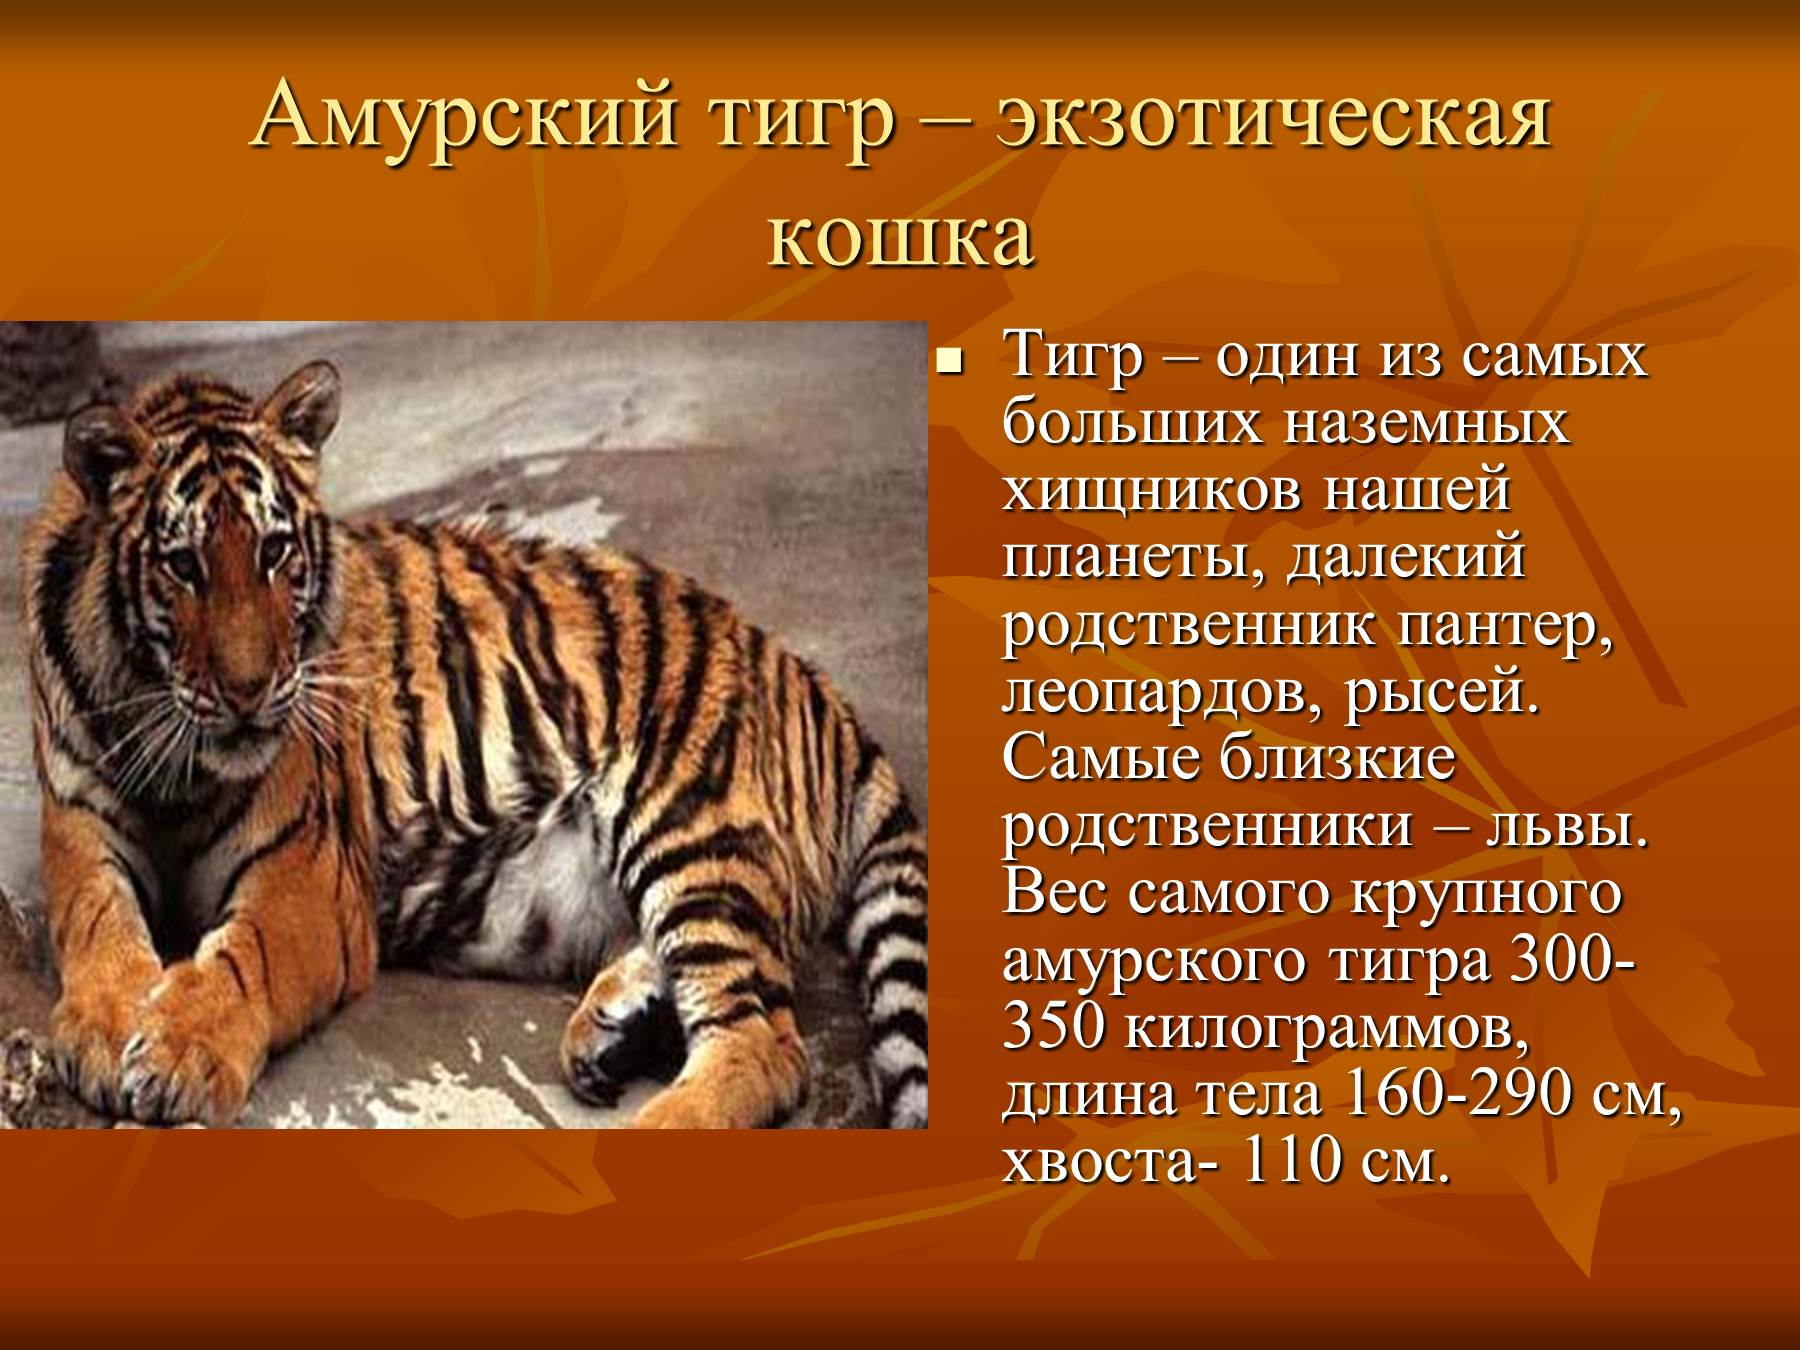 Описание Амурского тигра